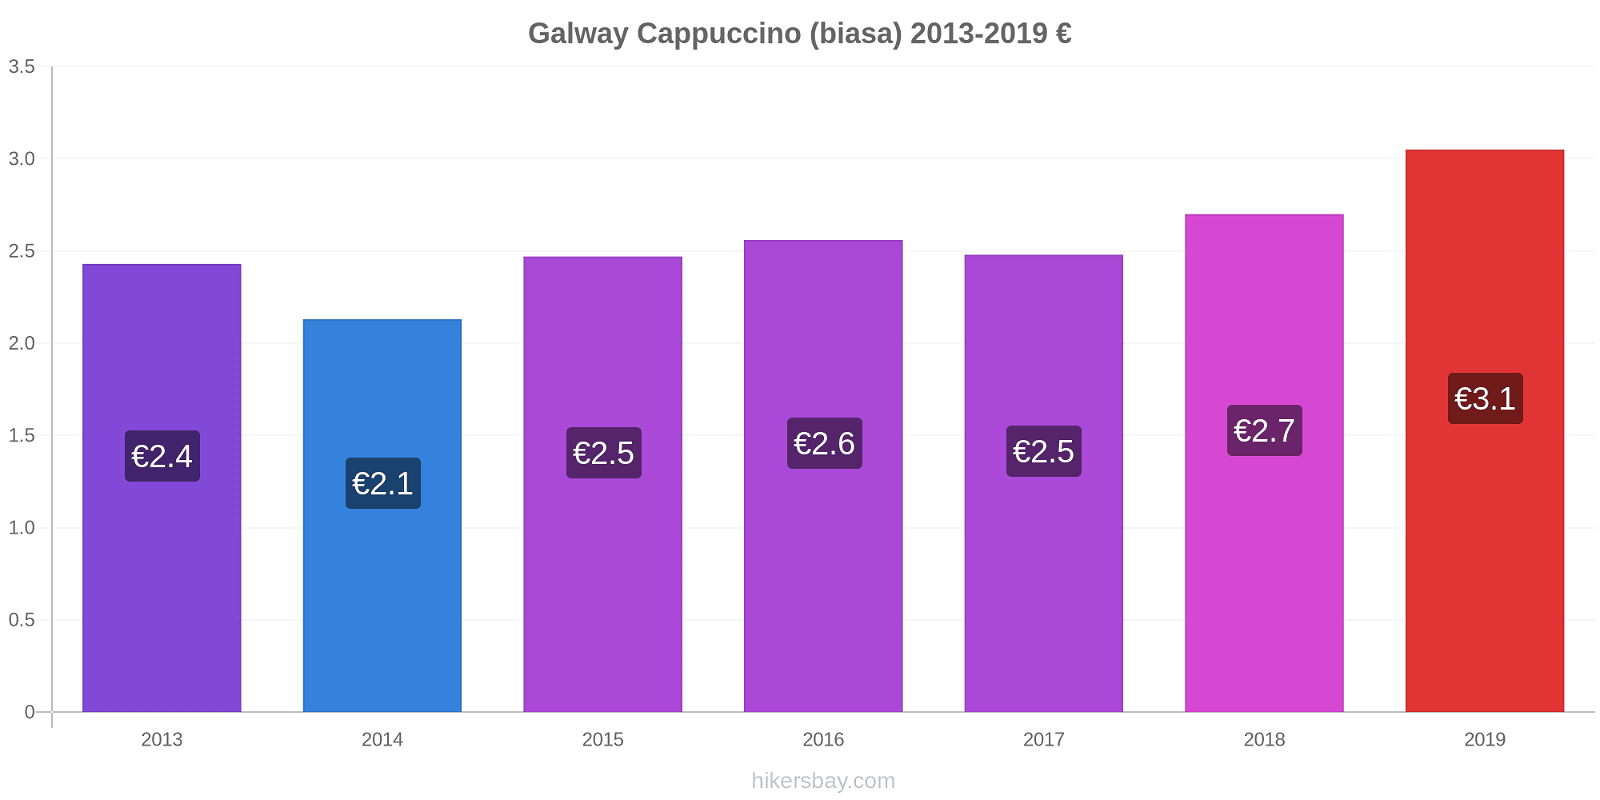 Galway perubahan harga Cappuccino (biasa) hikersbay.com